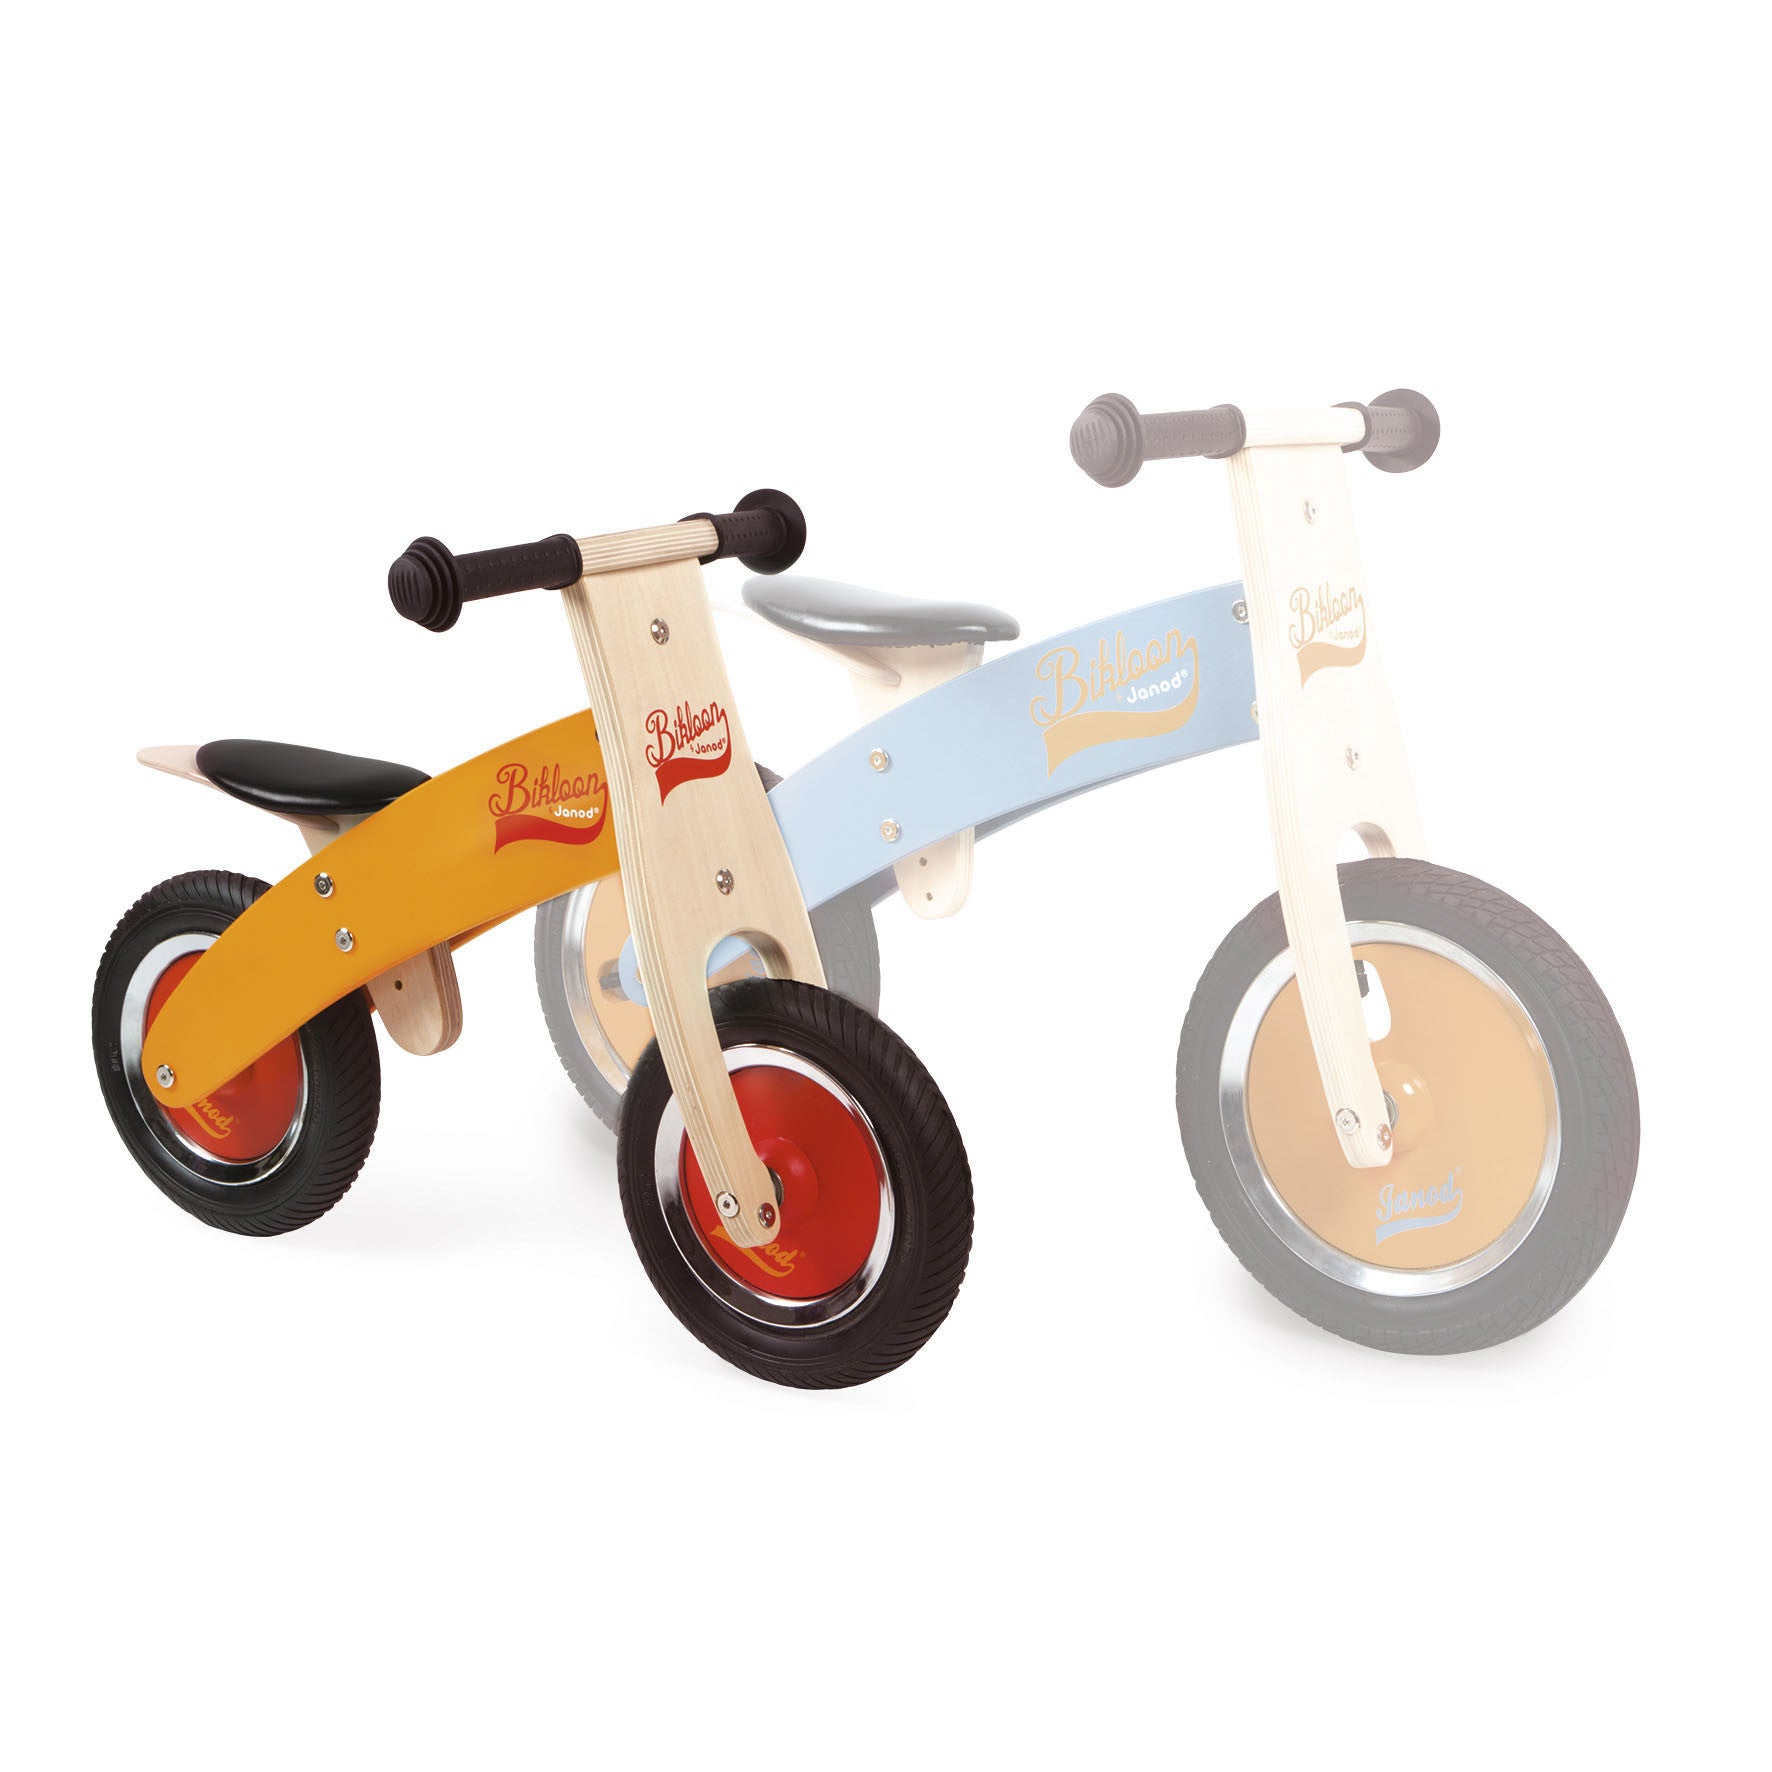 janod-my-first-orange-and-red-little-bikloon-balance-bike- (3)